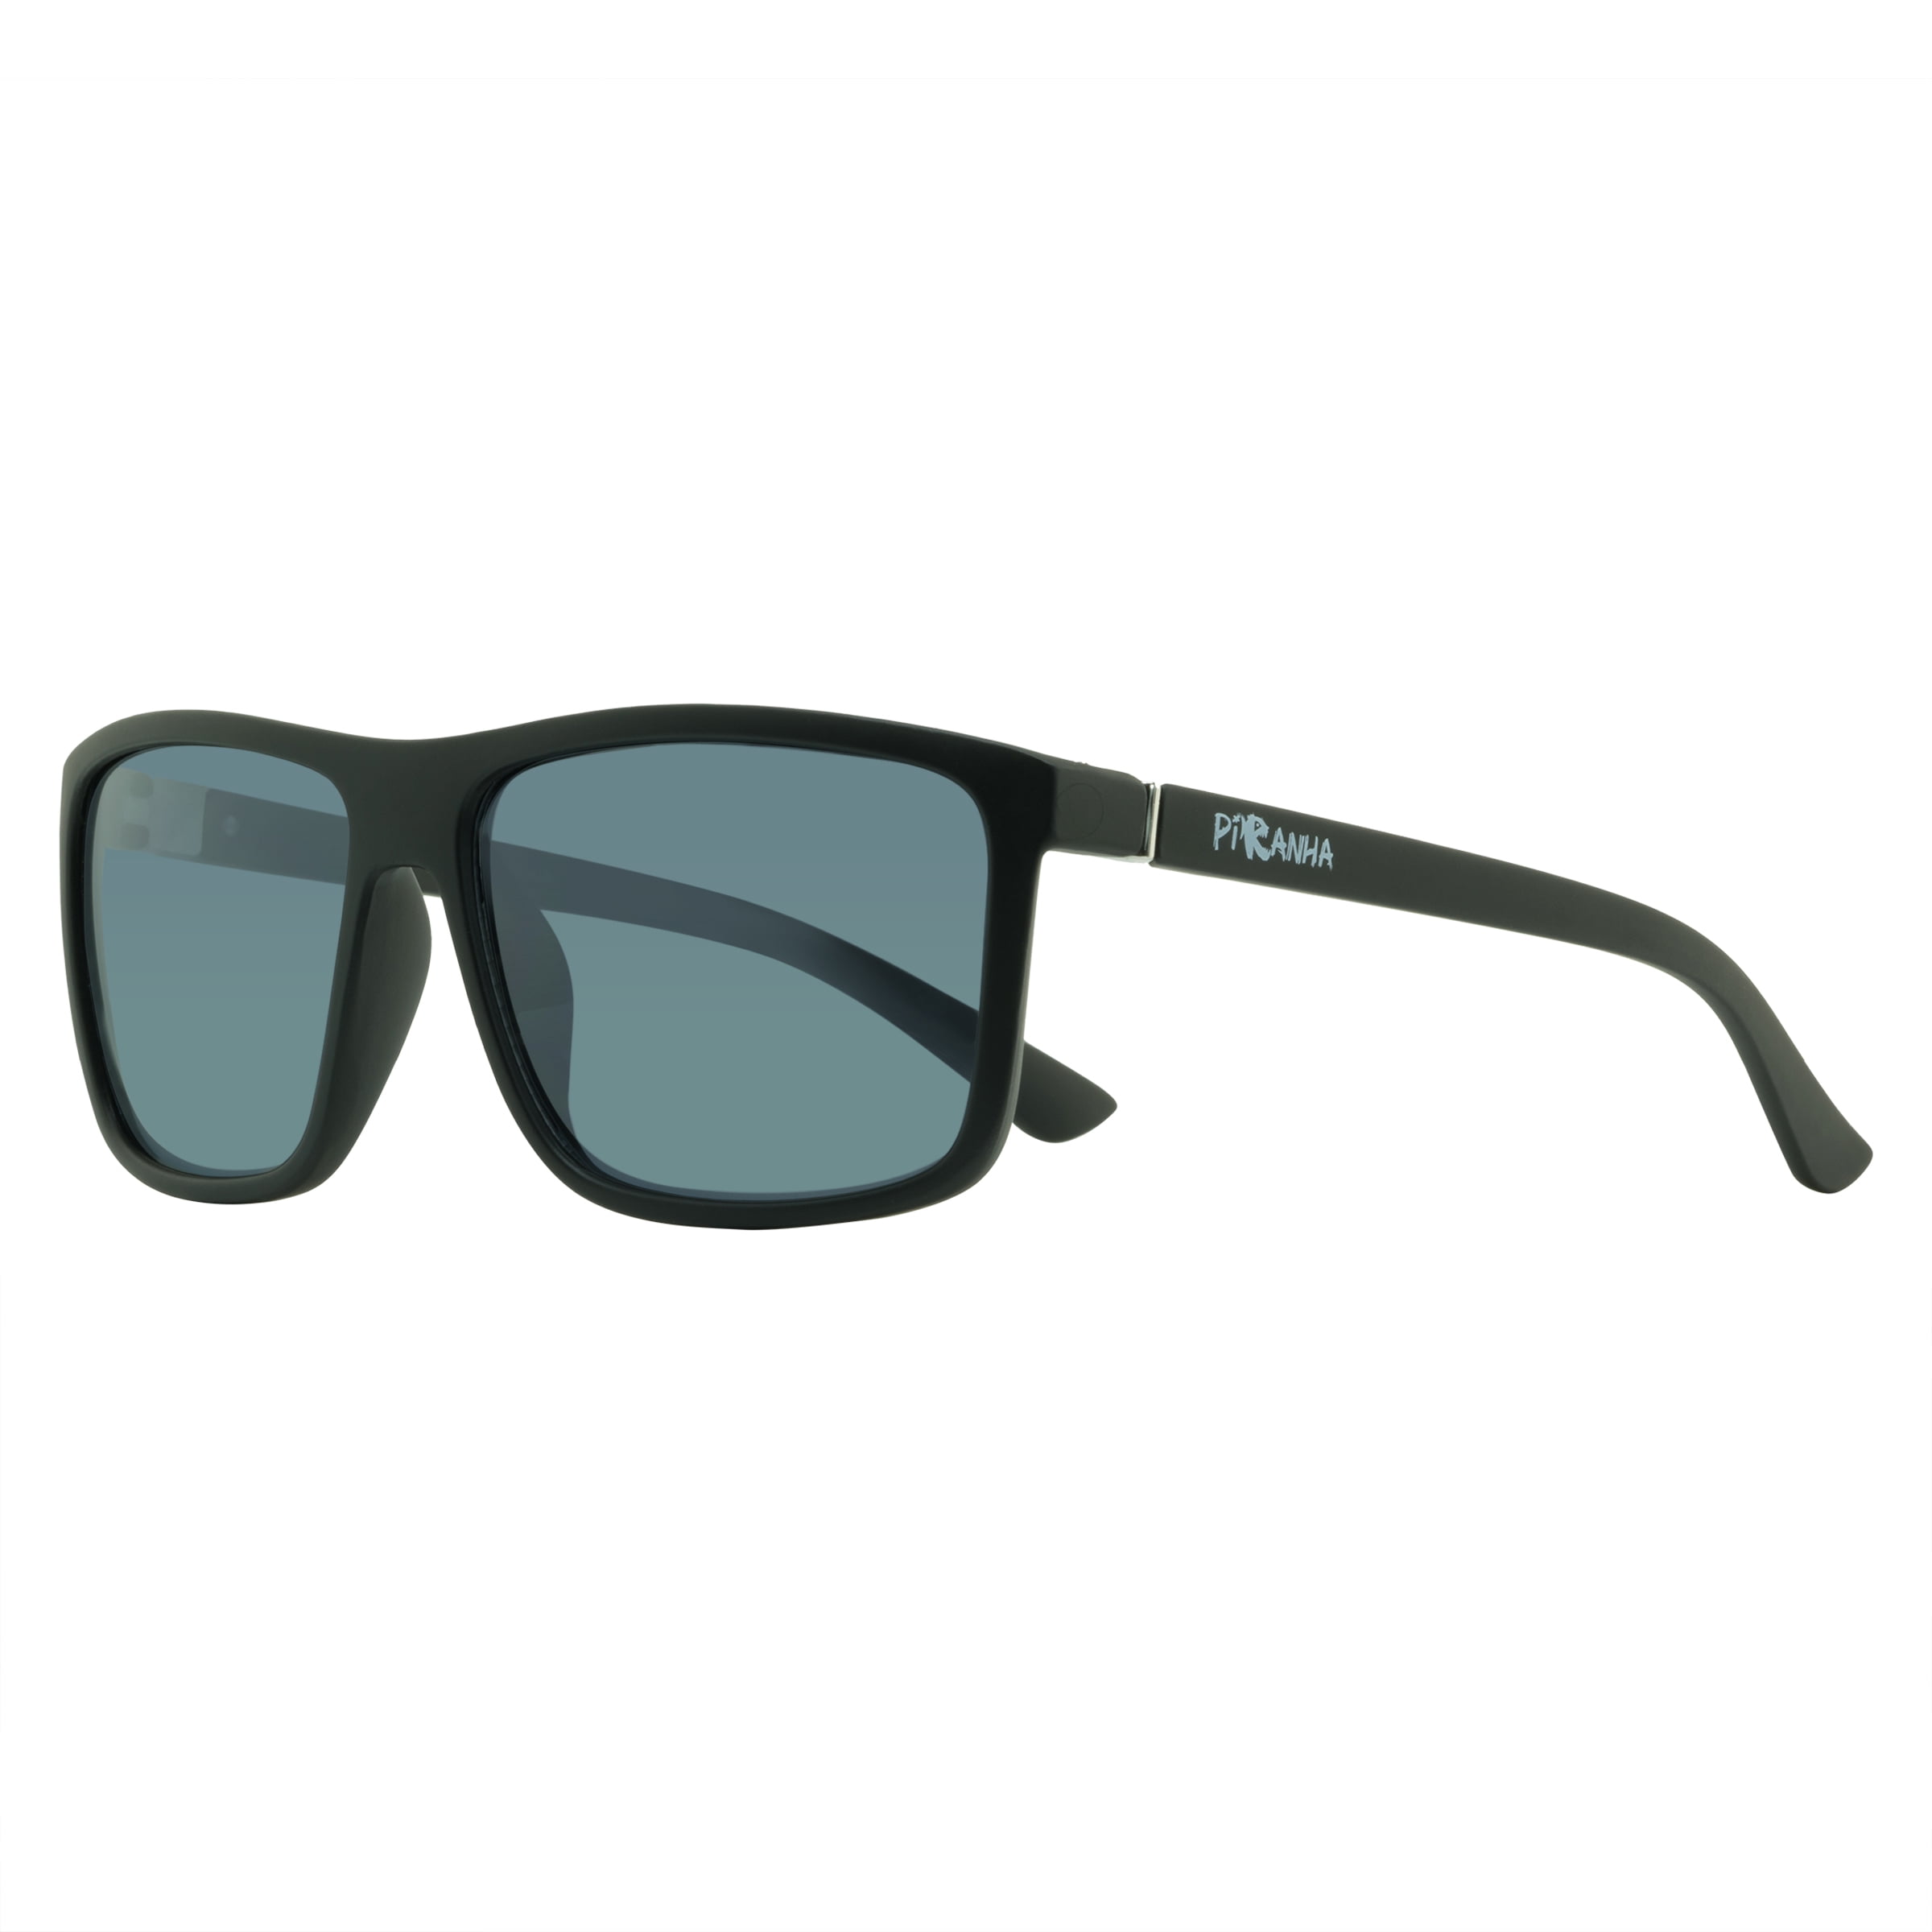 Piranha Eyewear Reaction Square Black Sunglasses with Smoke Lens - Unisex